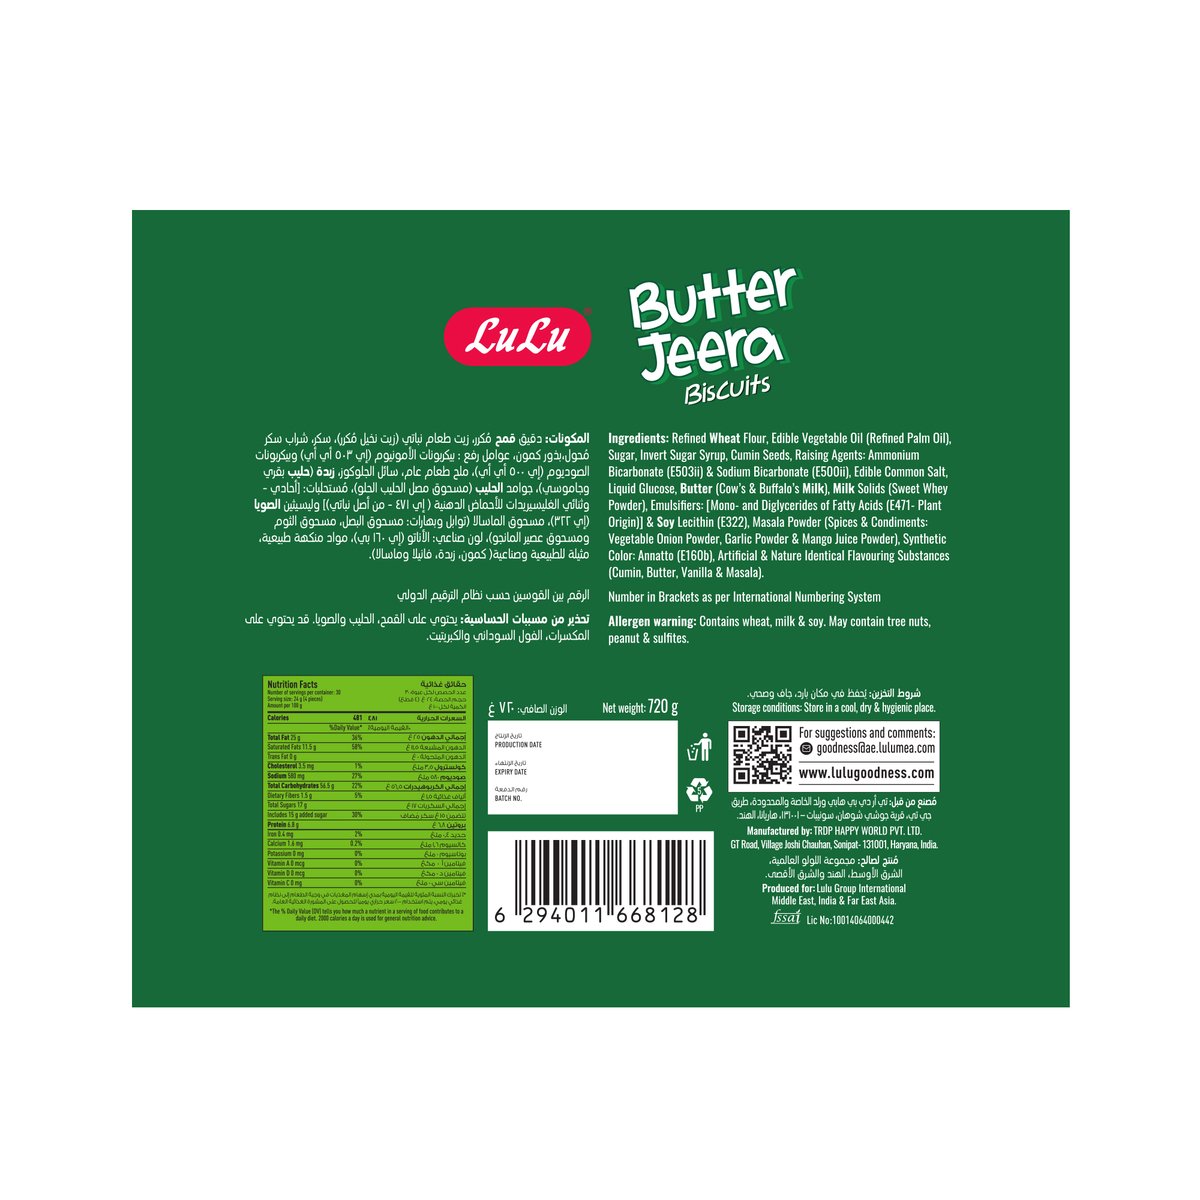 LuLu Butter Jeera Biscuits 90 g